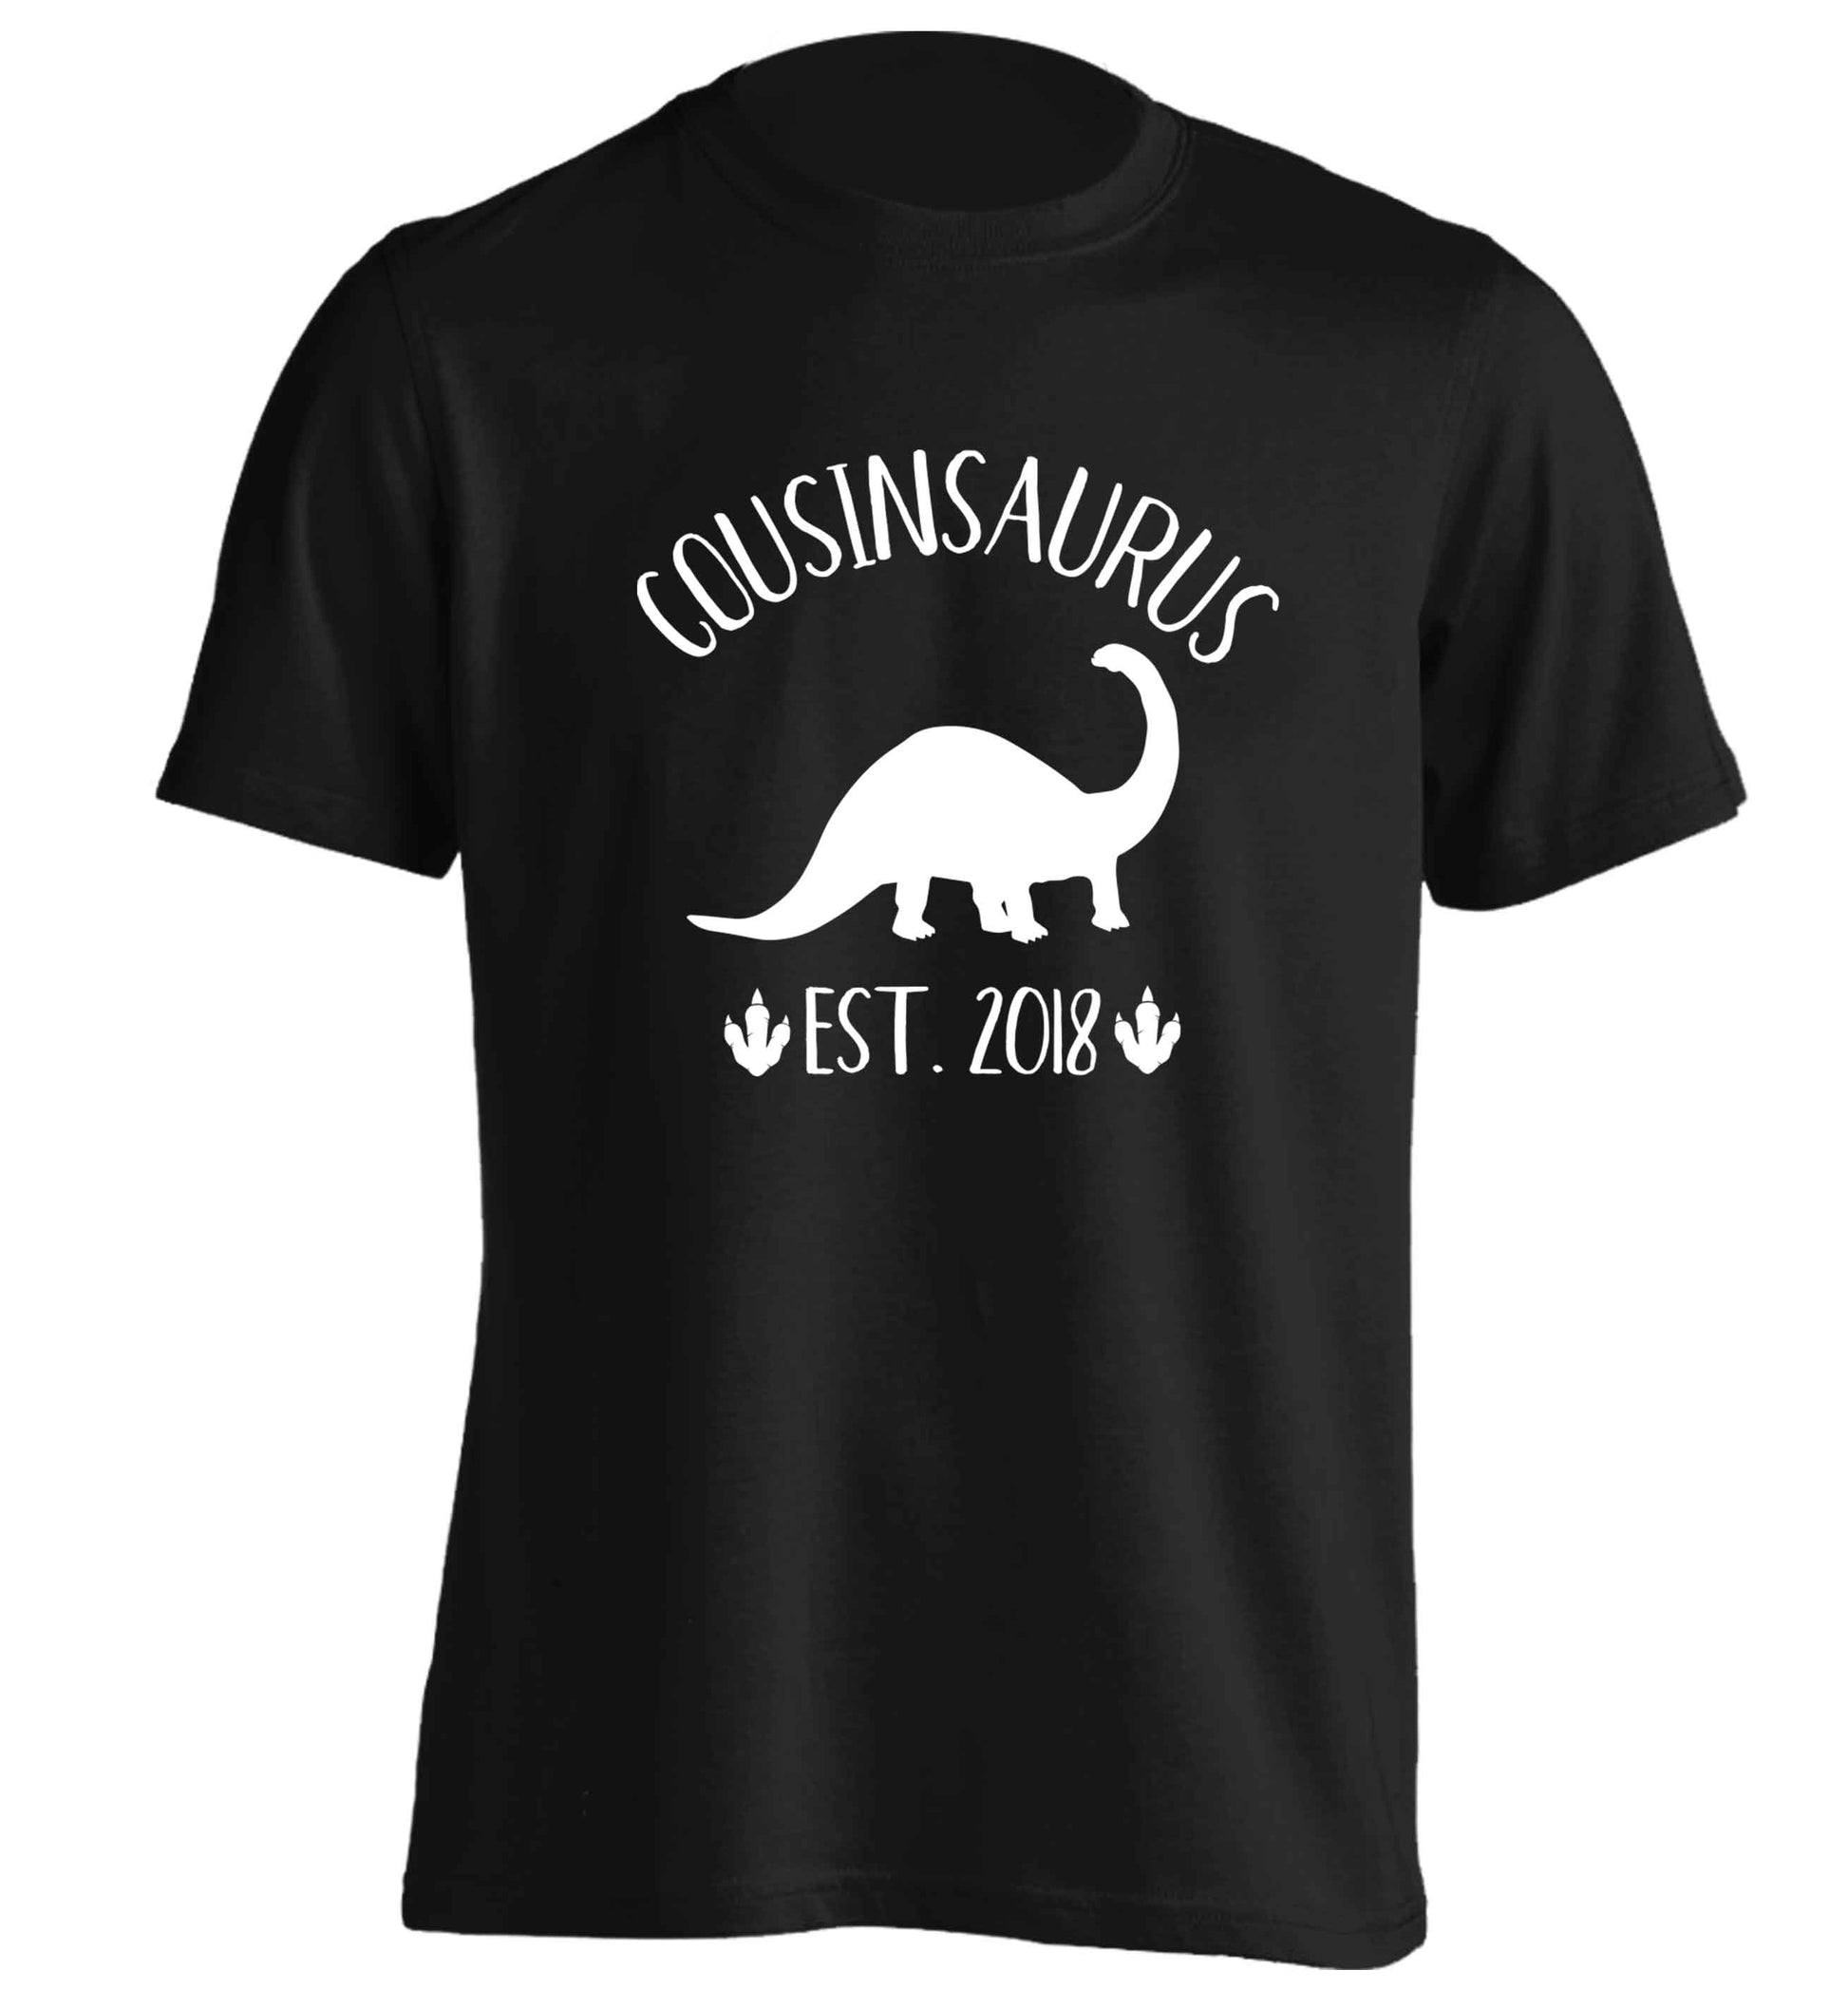 Personalised cousinsaurus since (custom date) adults unisex black Tshirt 2XL